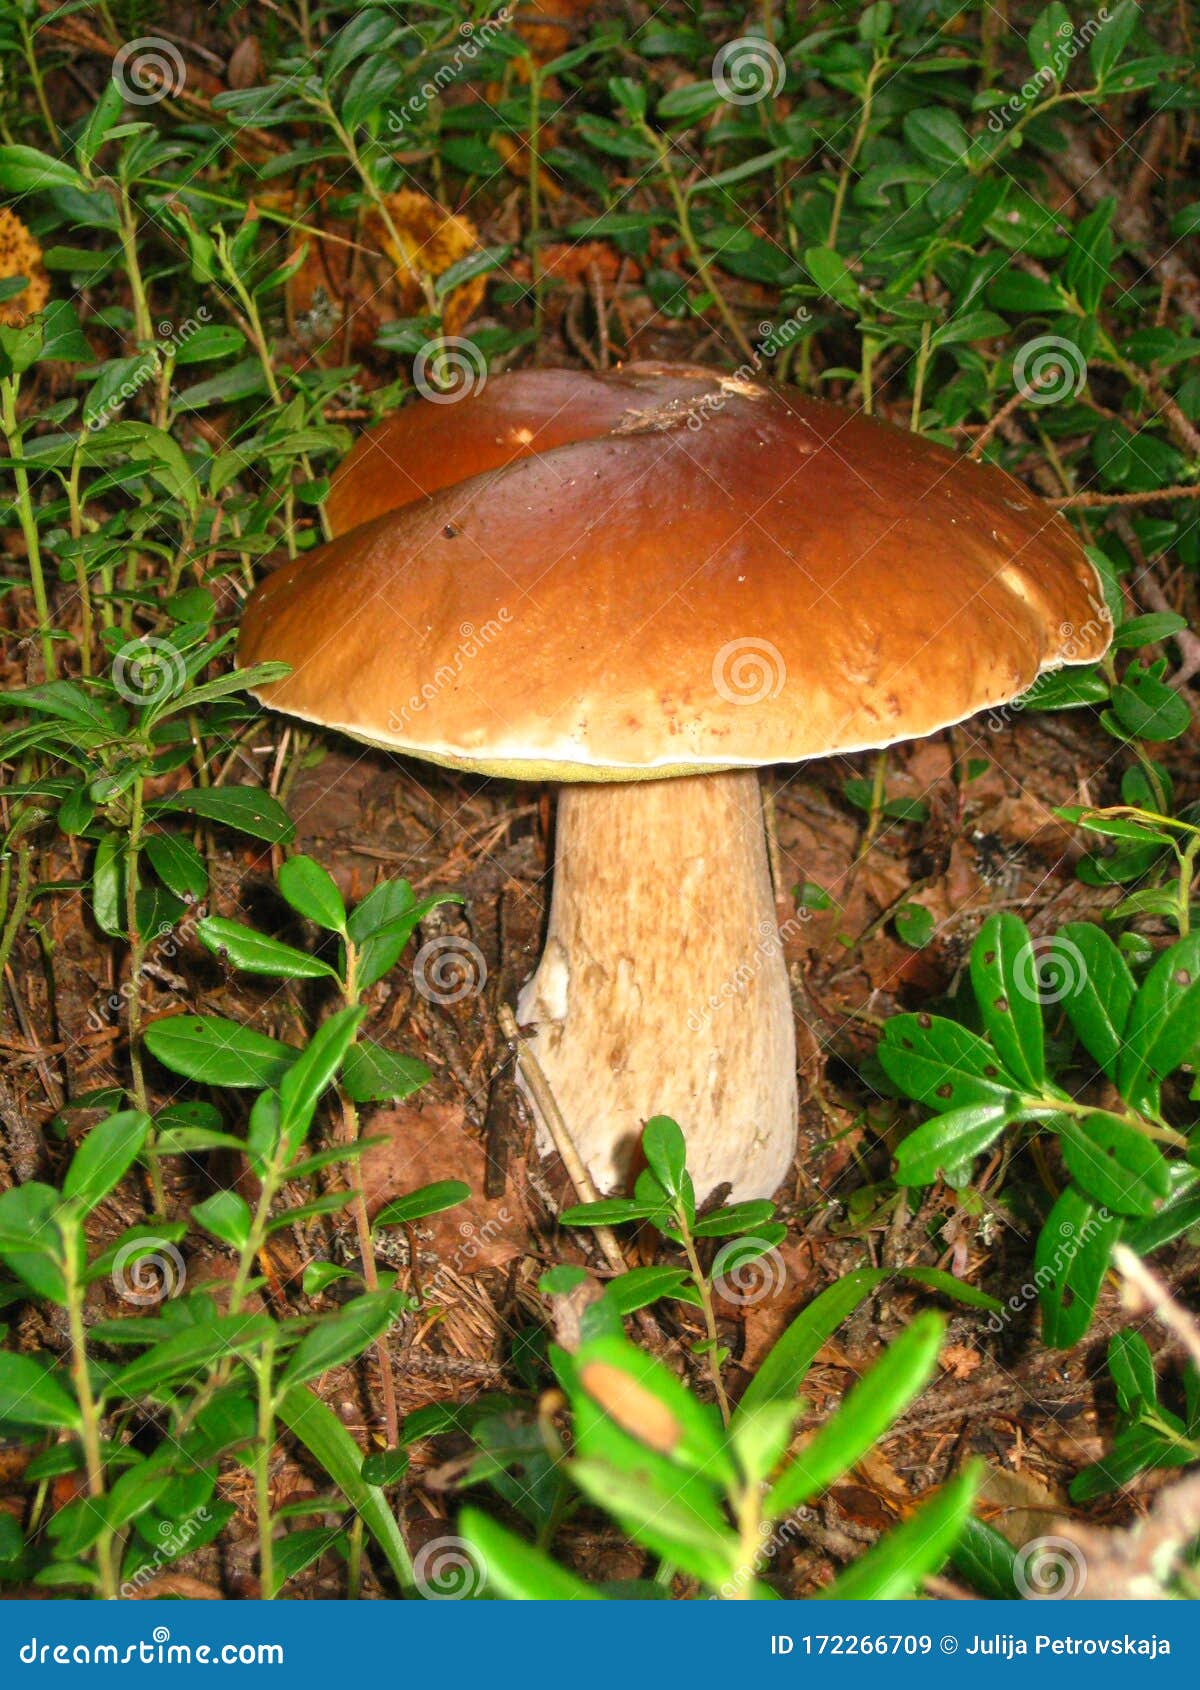 Edible Forest Mushroom A Beautiful Large Even Boletus Or Porcini Mushroom Find In The Forest Good Luck Mushroomer Mushroom Stock Image Image Of North Food